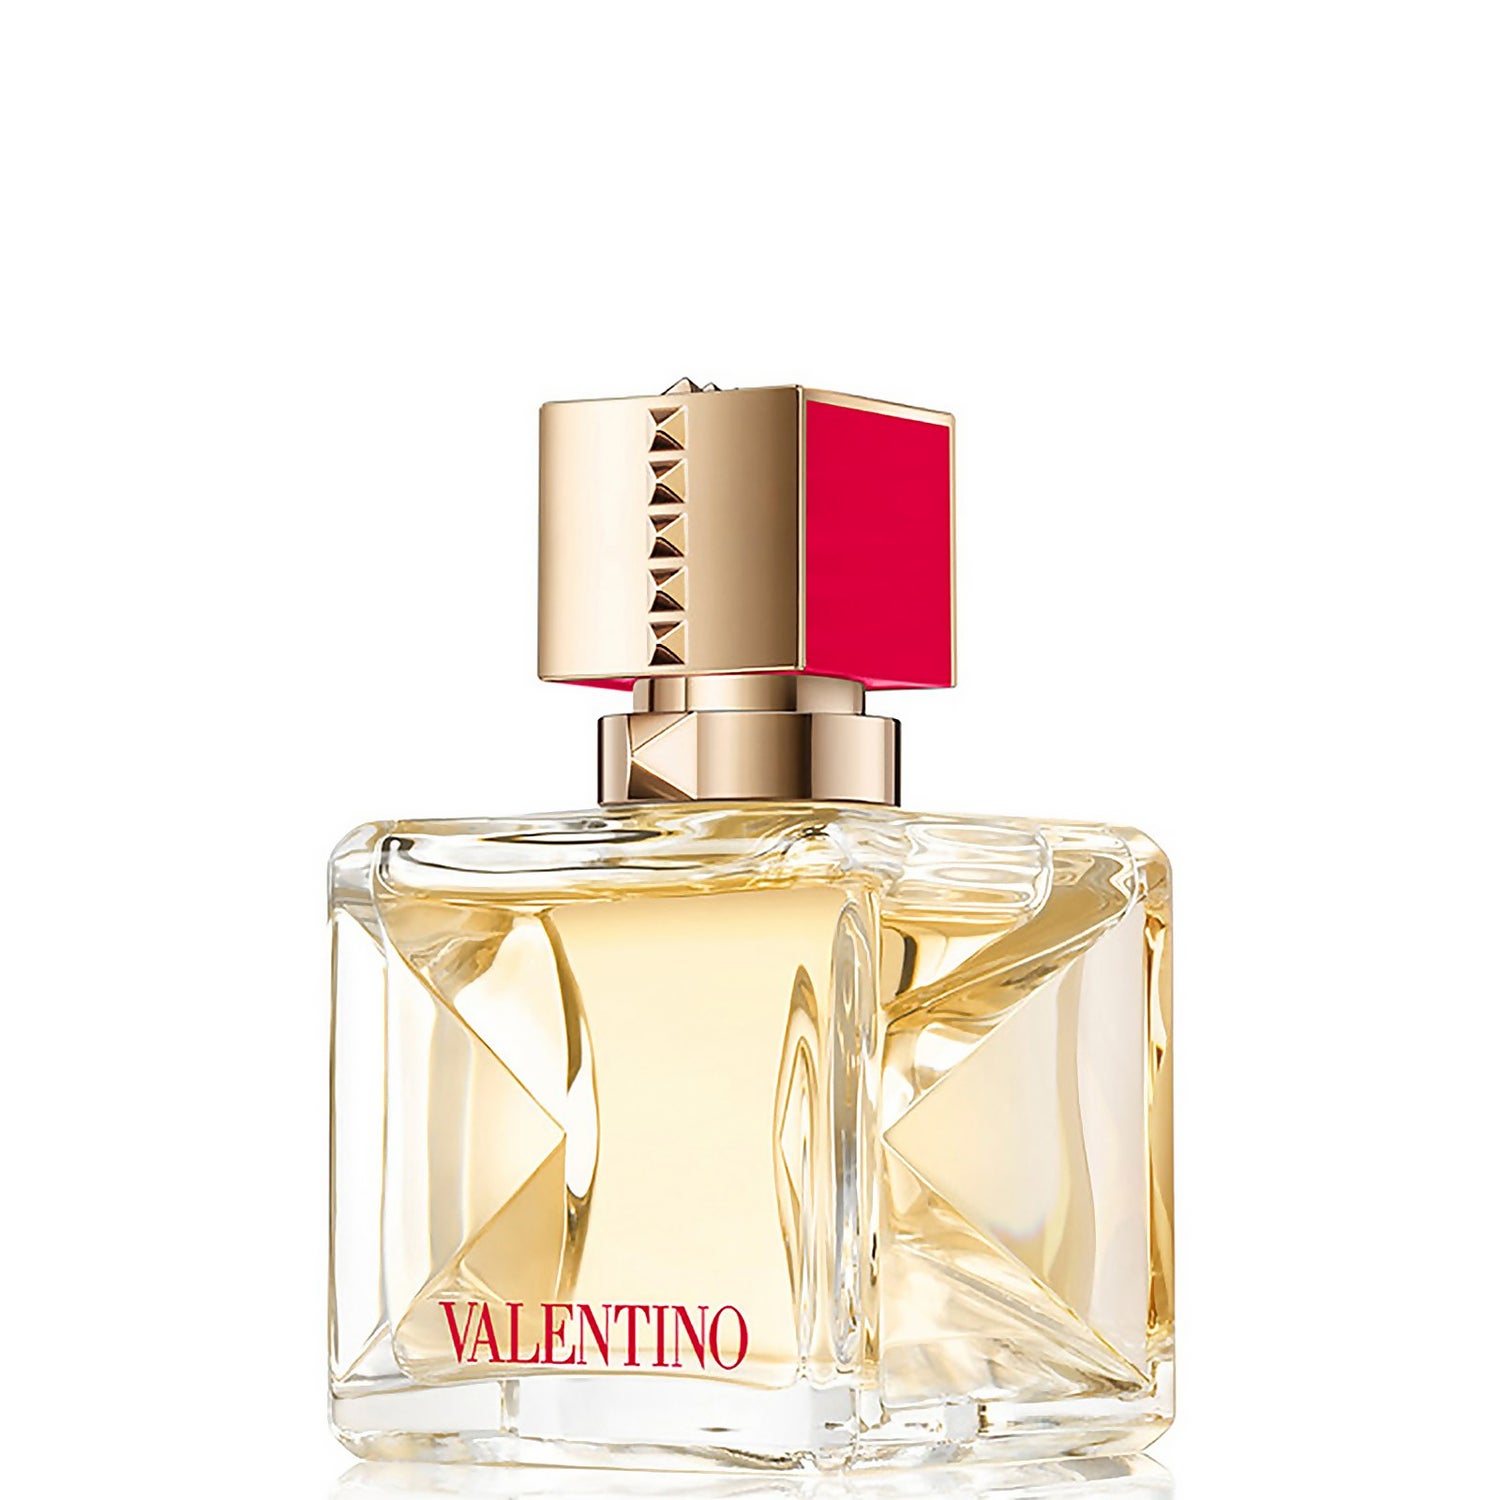 Valentino Voce Viva Eau de Parfum til kvinder - 50 ml